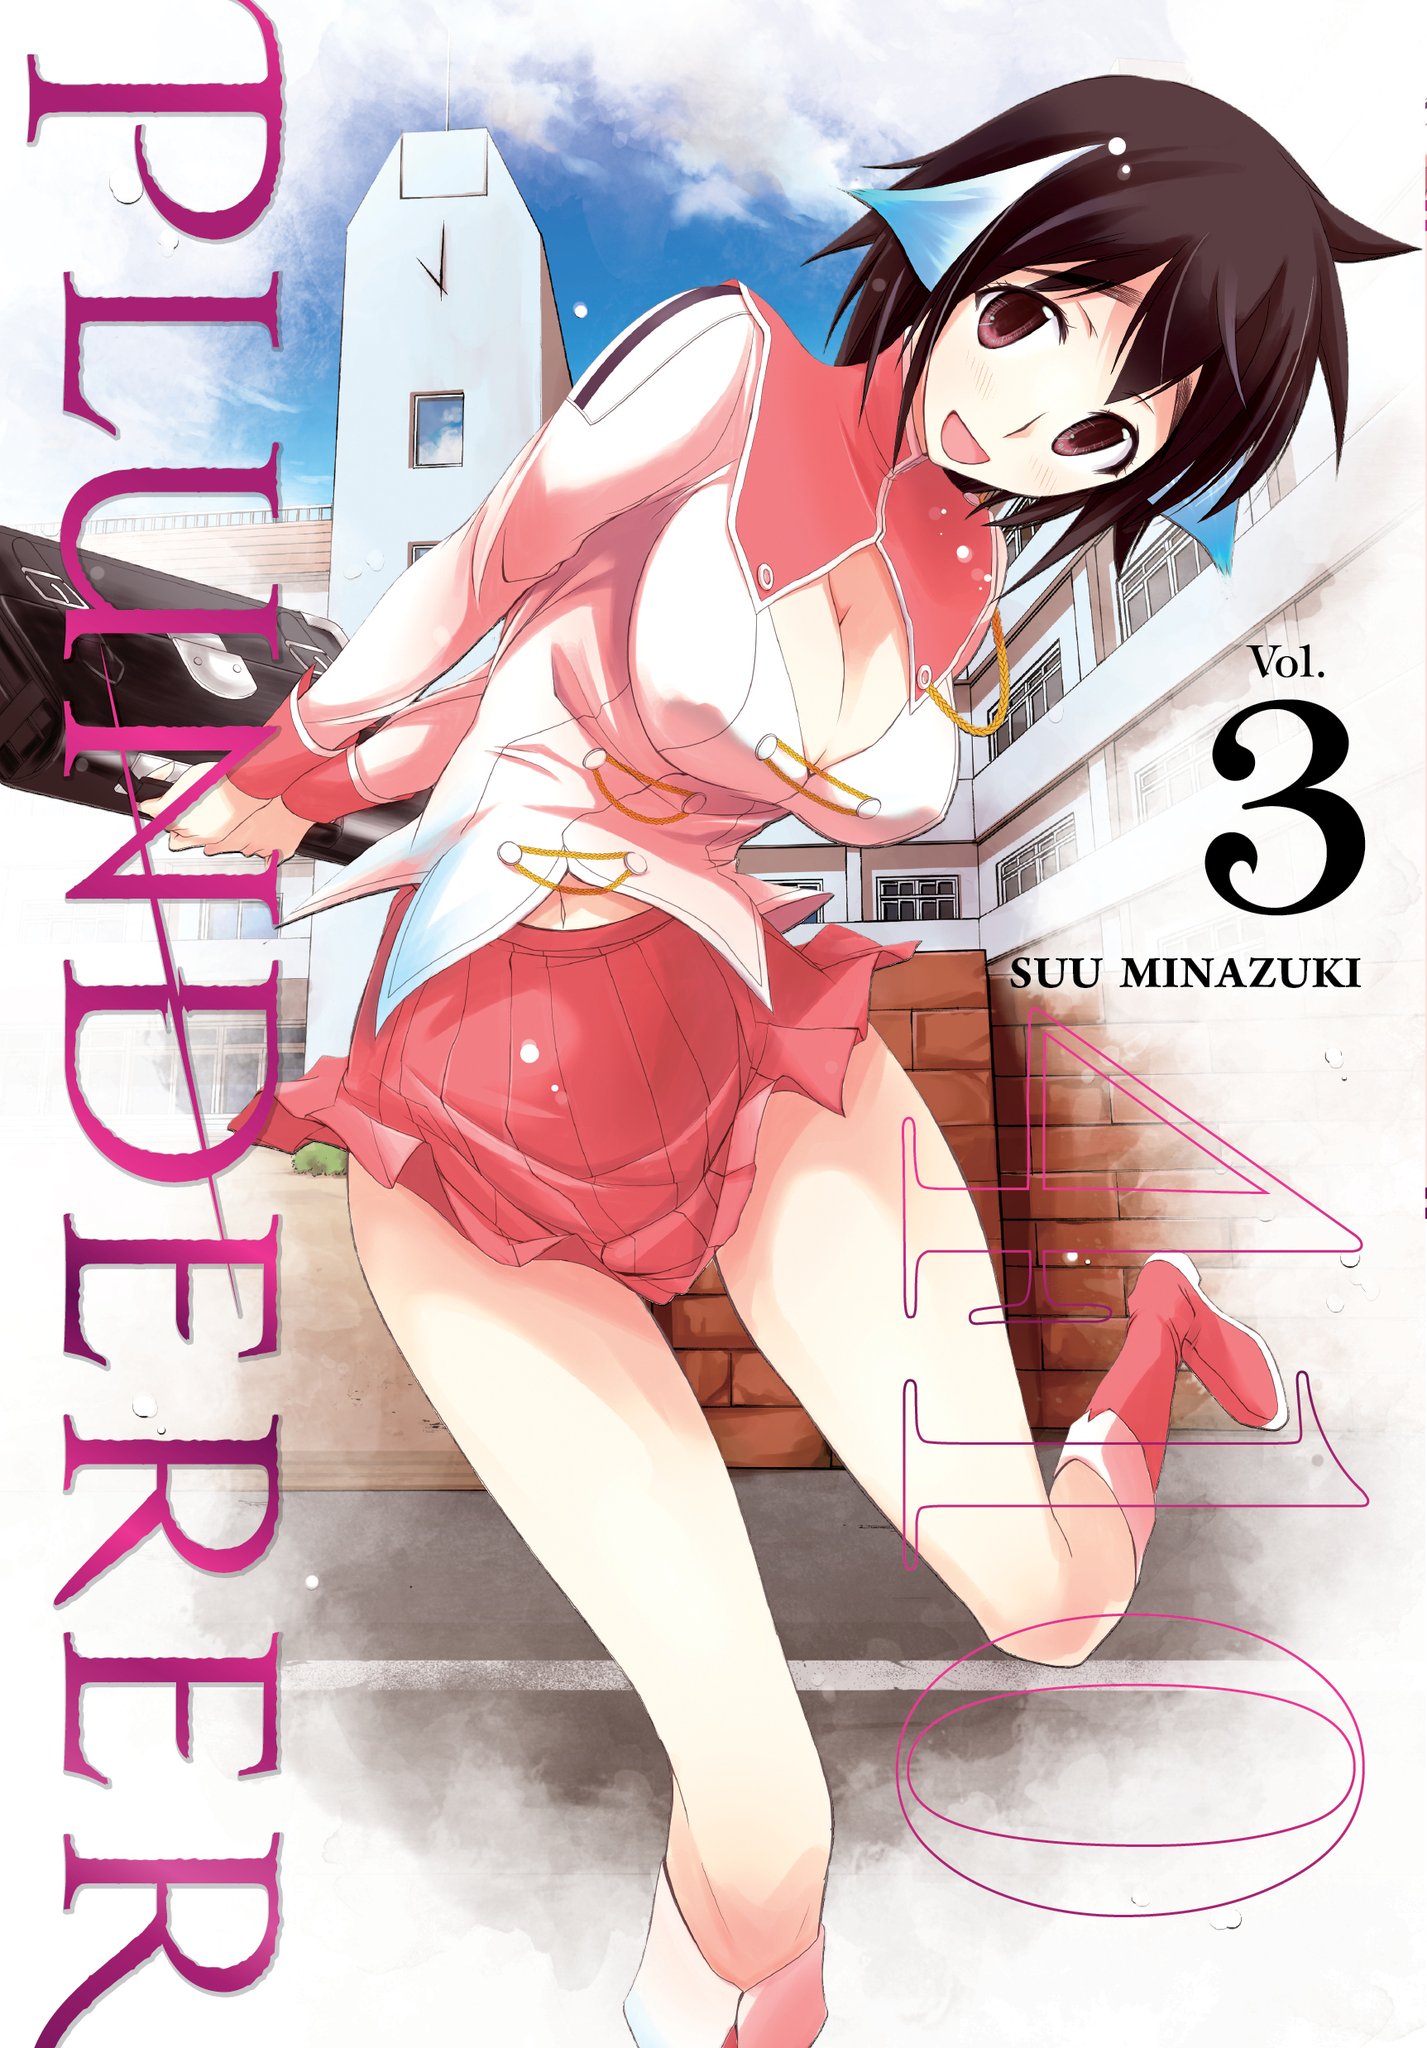 Plunderer - Volume 3 | Suu Minazuki